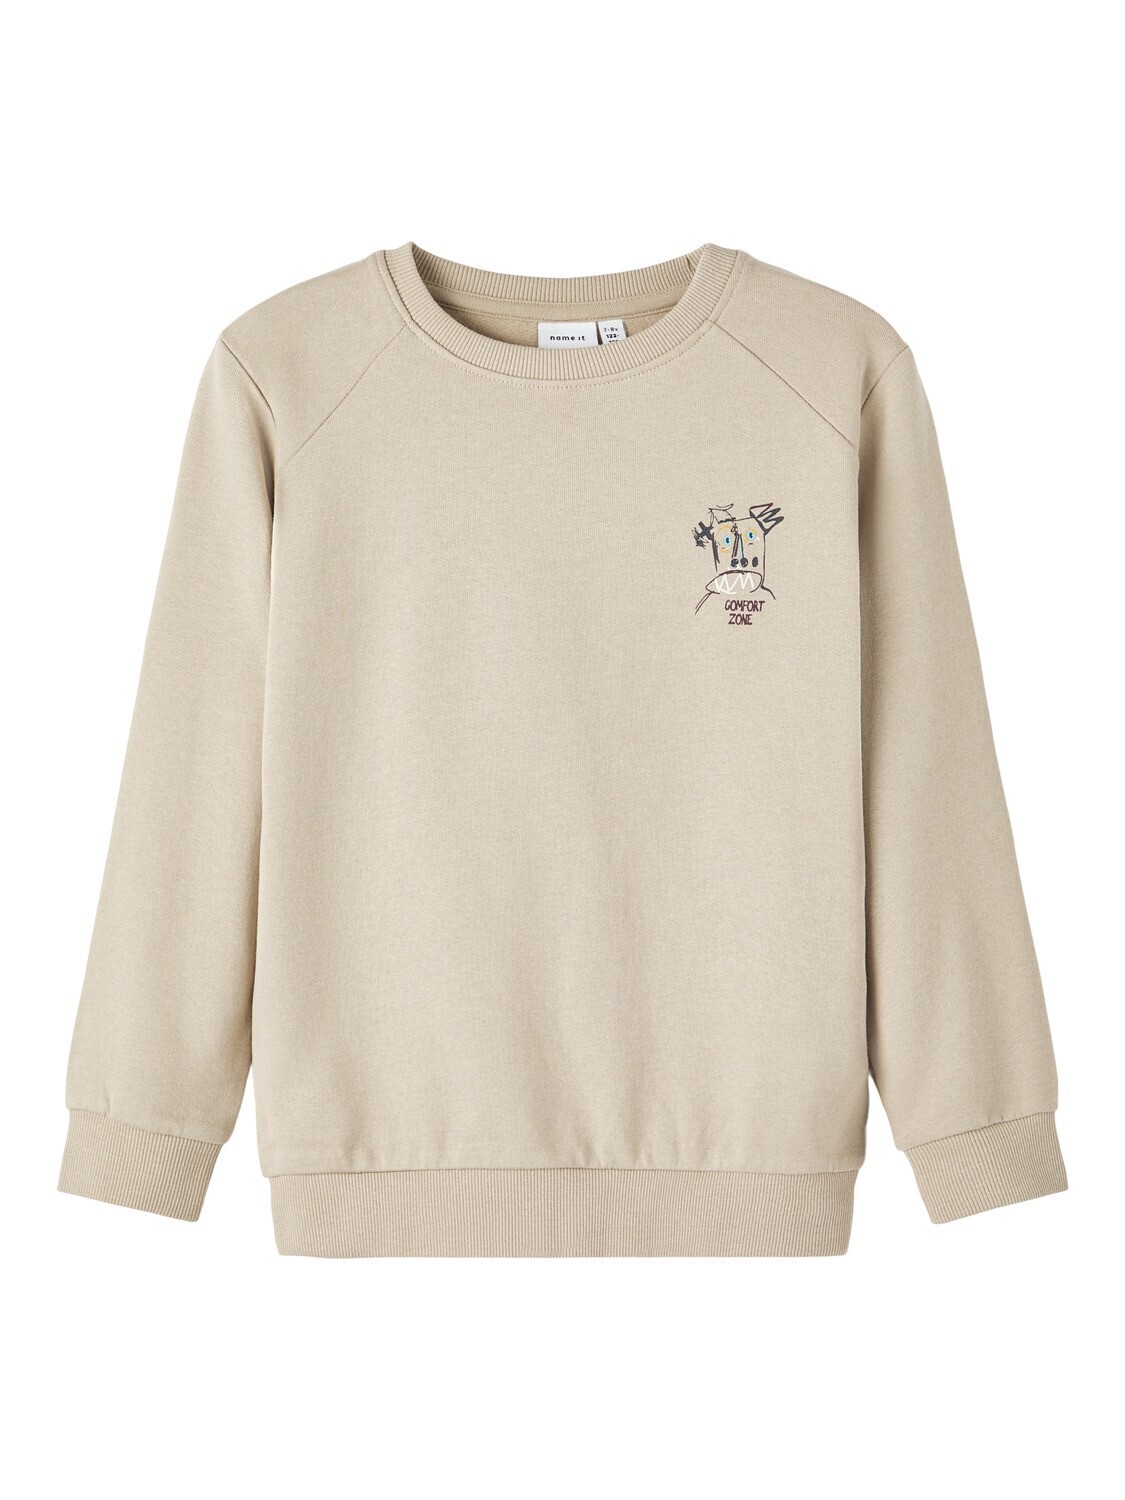 KIDS sweater - OHULAN - oxford tan